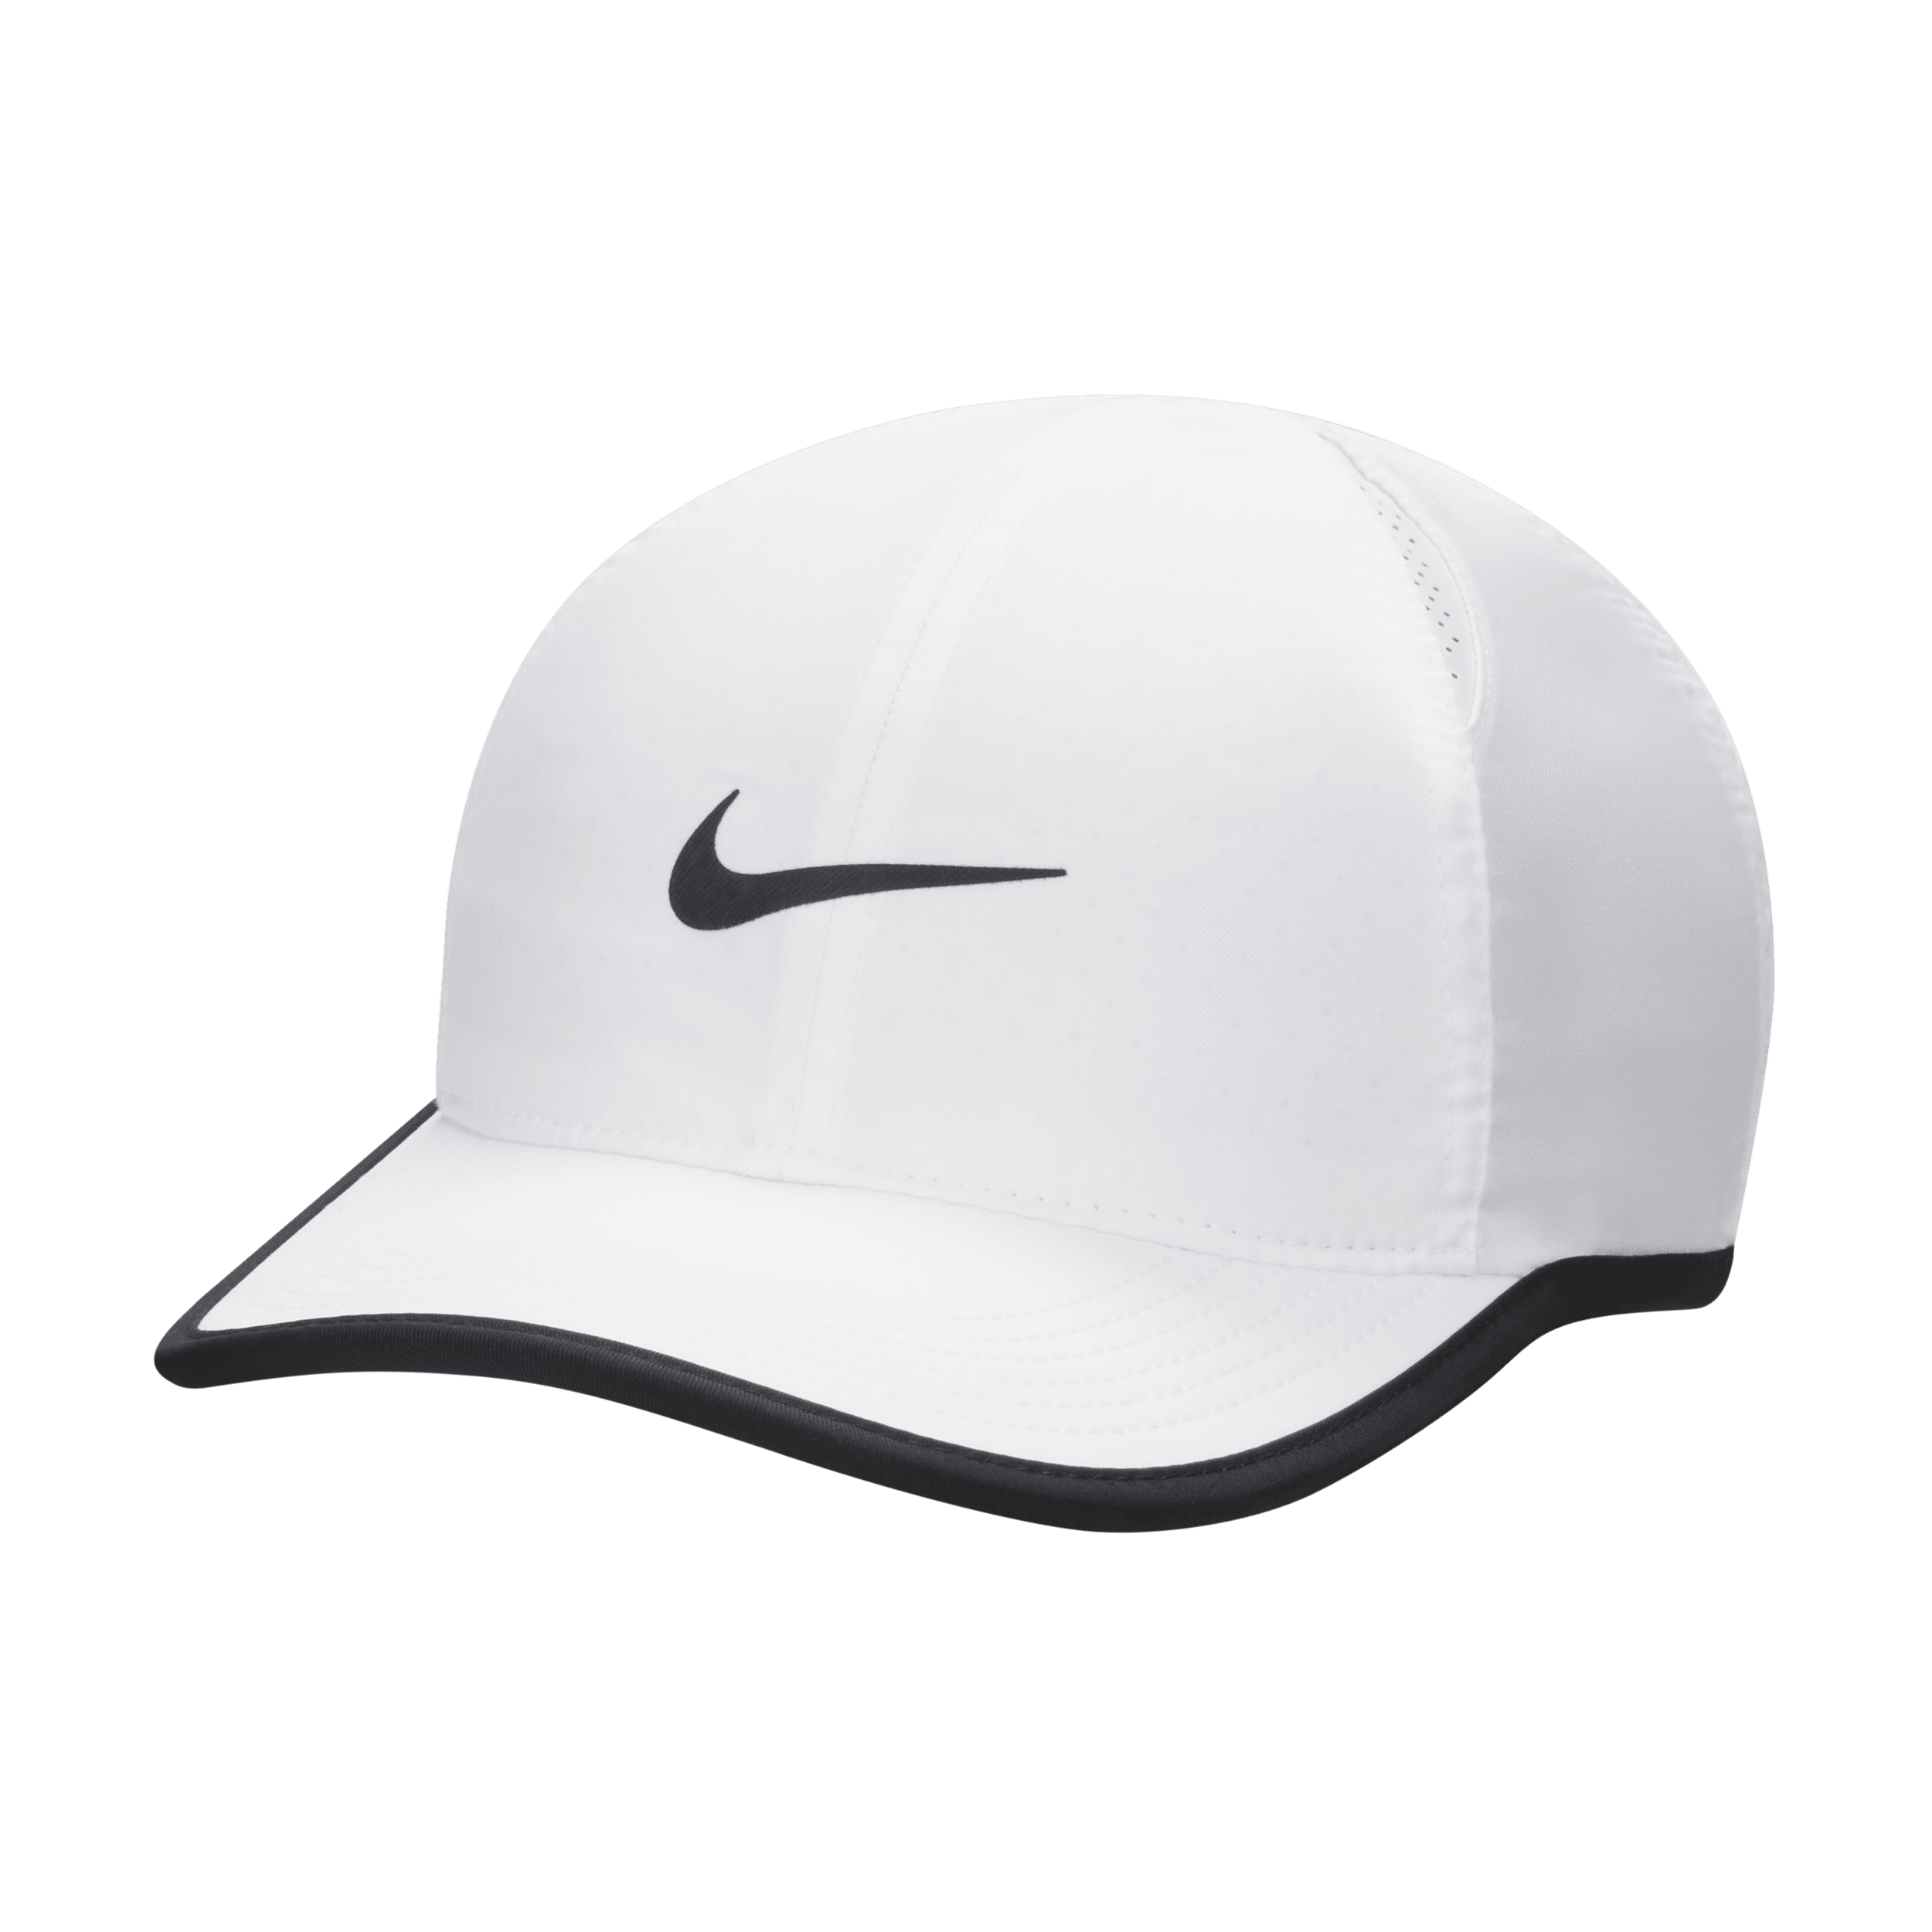 Nike Dri-FIT Club Gorra sin estructura ultraligera - Niño/a - Blanco